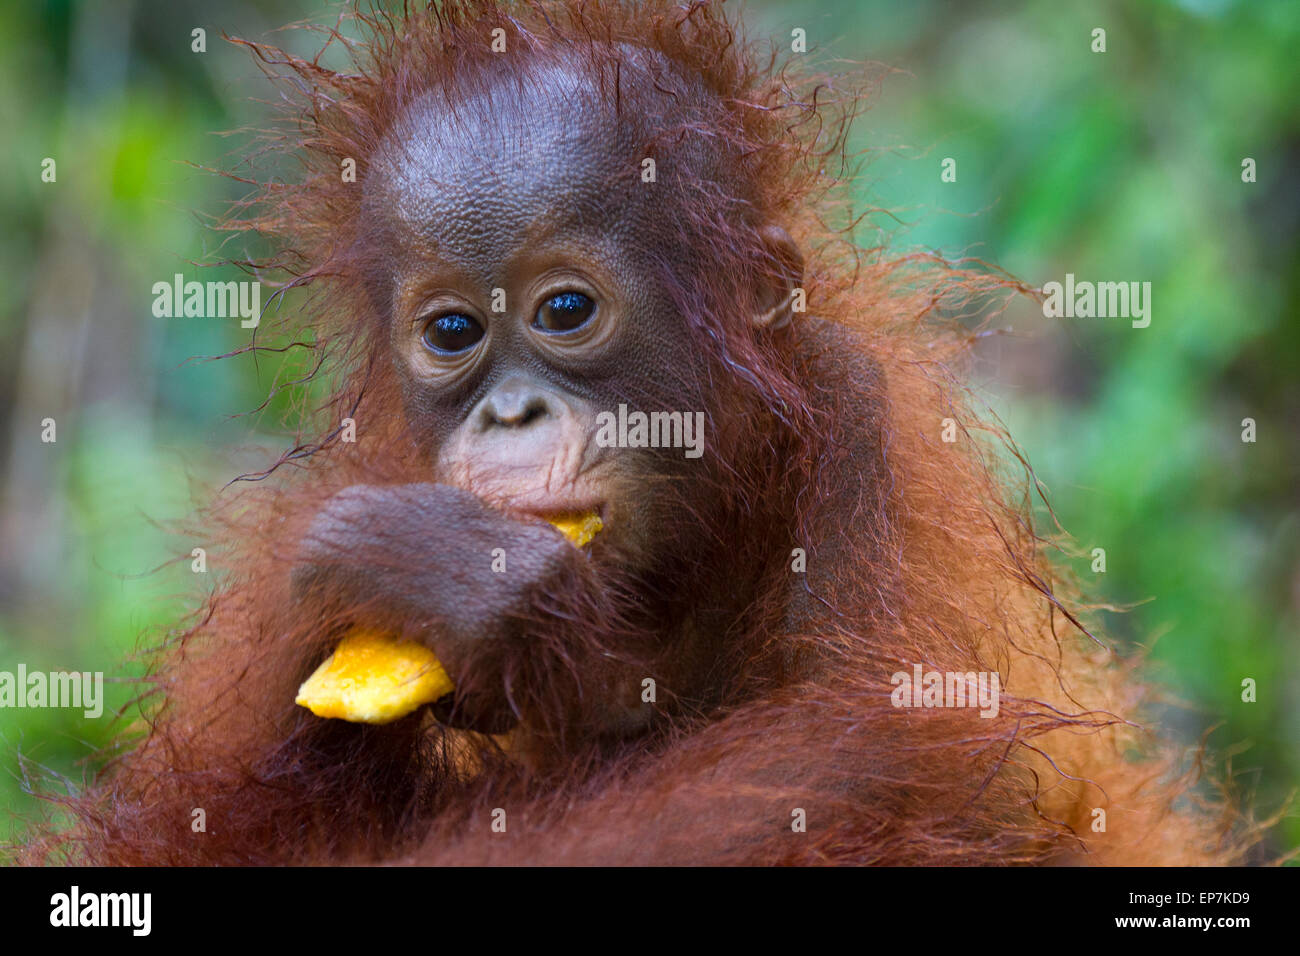 Baby Orangutan in frühen Alter Stockfoto